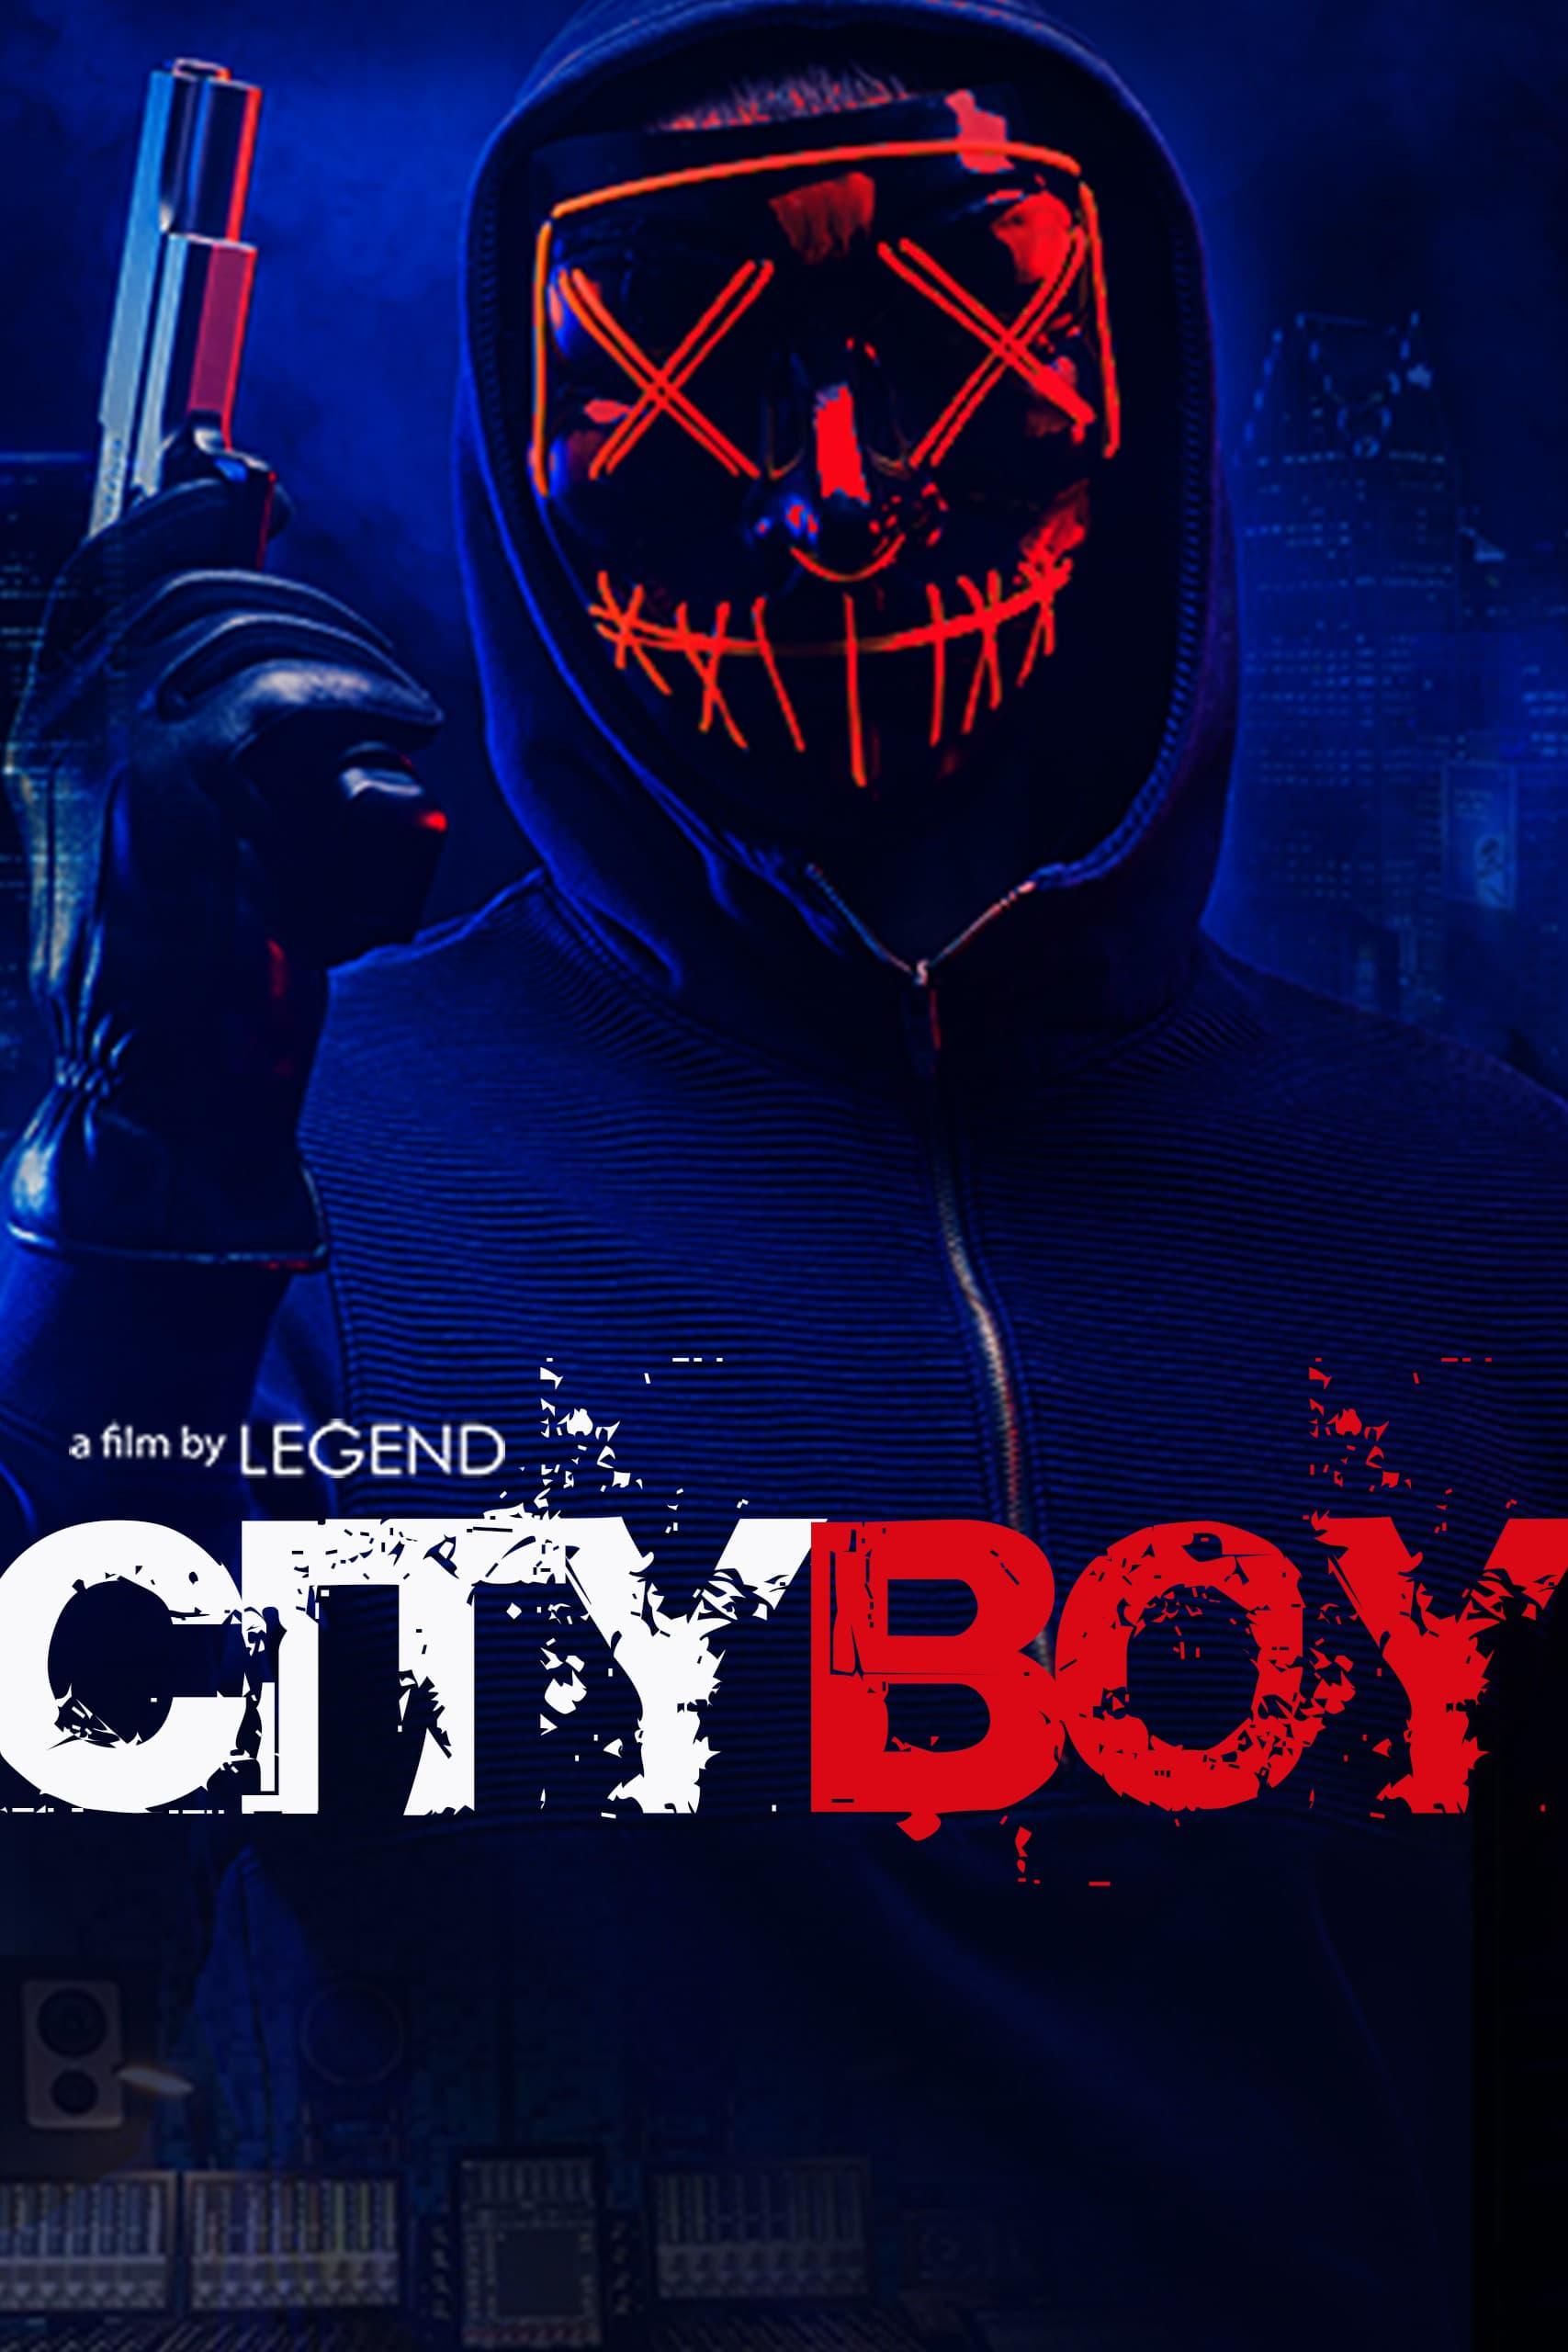 City Boy poster